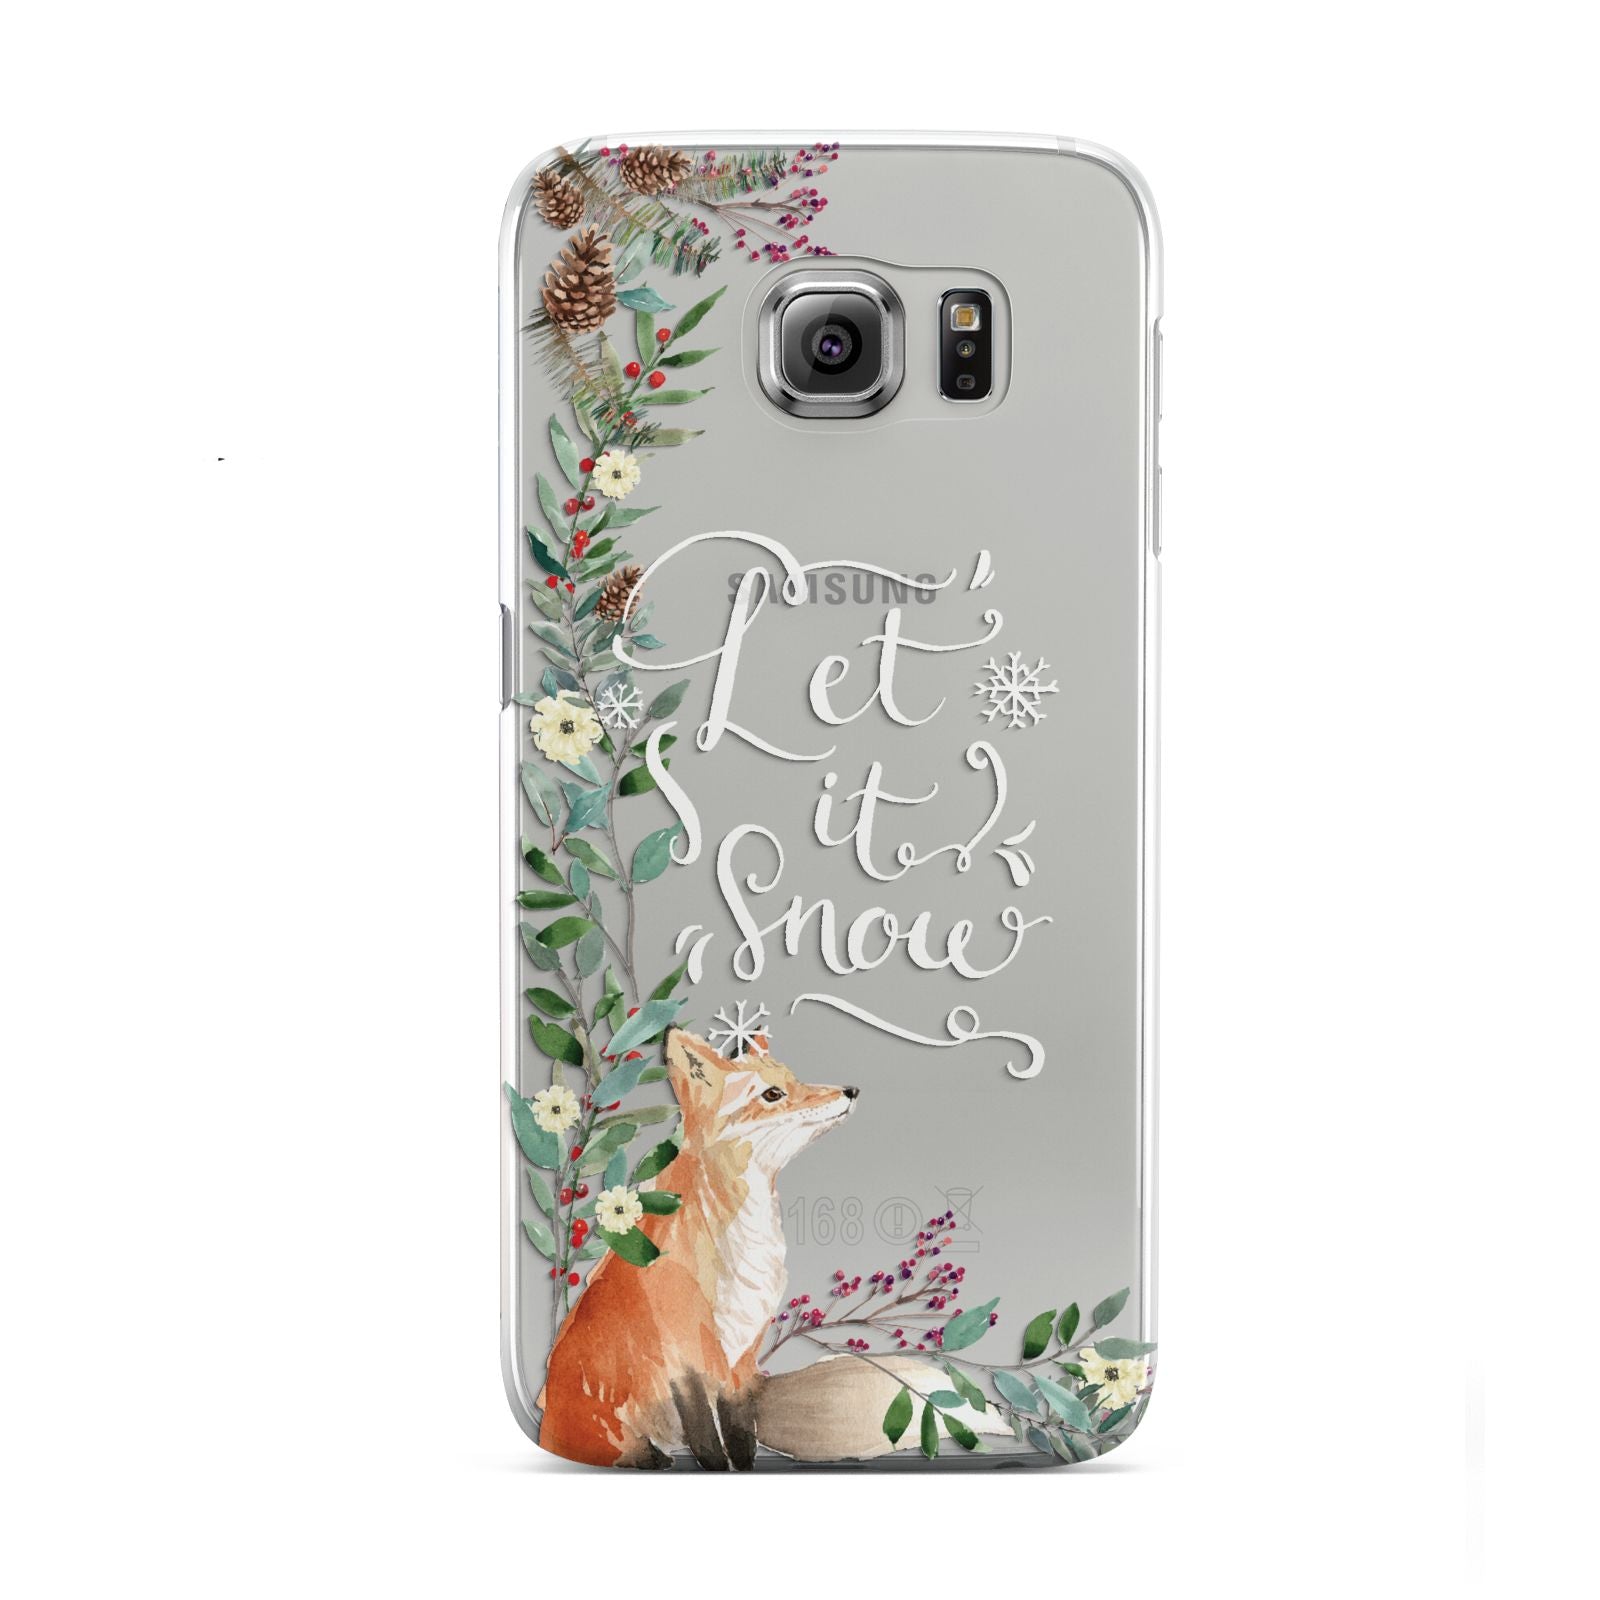 Let It Snow Christmas Samsung Galaxy S6 Case